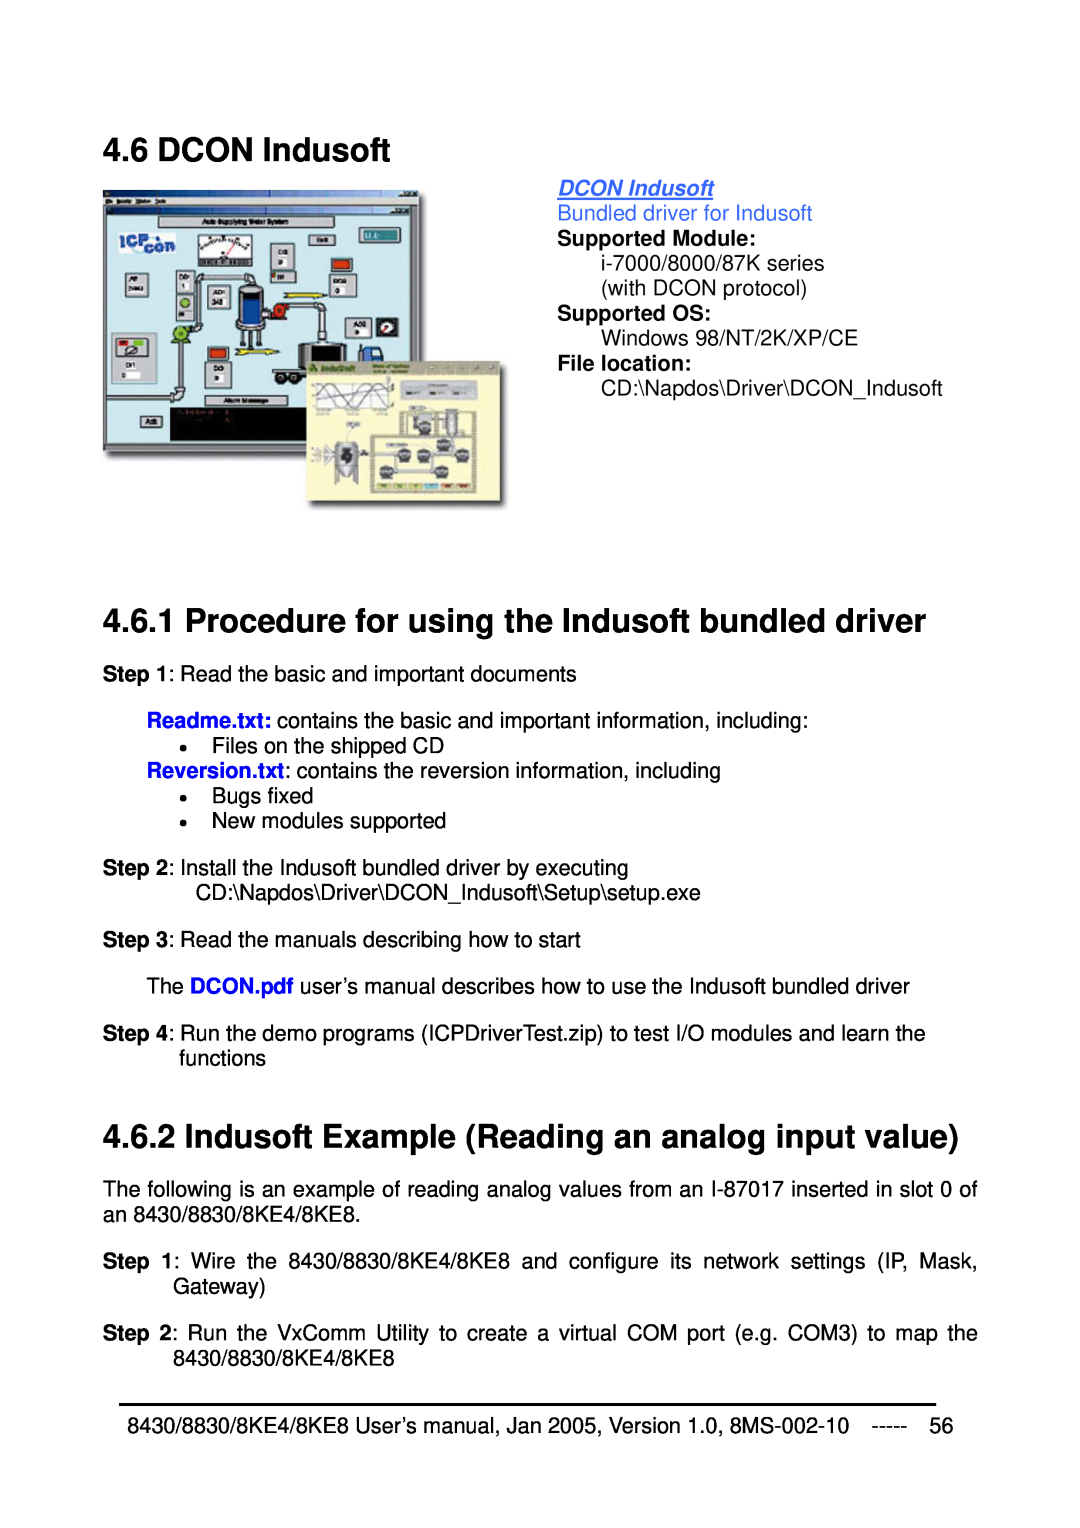 ICP DAS USA 8KE8, 8KE4, 8430 DCON Indusoft, Procedure for using the Indusoft bundled driver, Bundled driver for Indusoft 